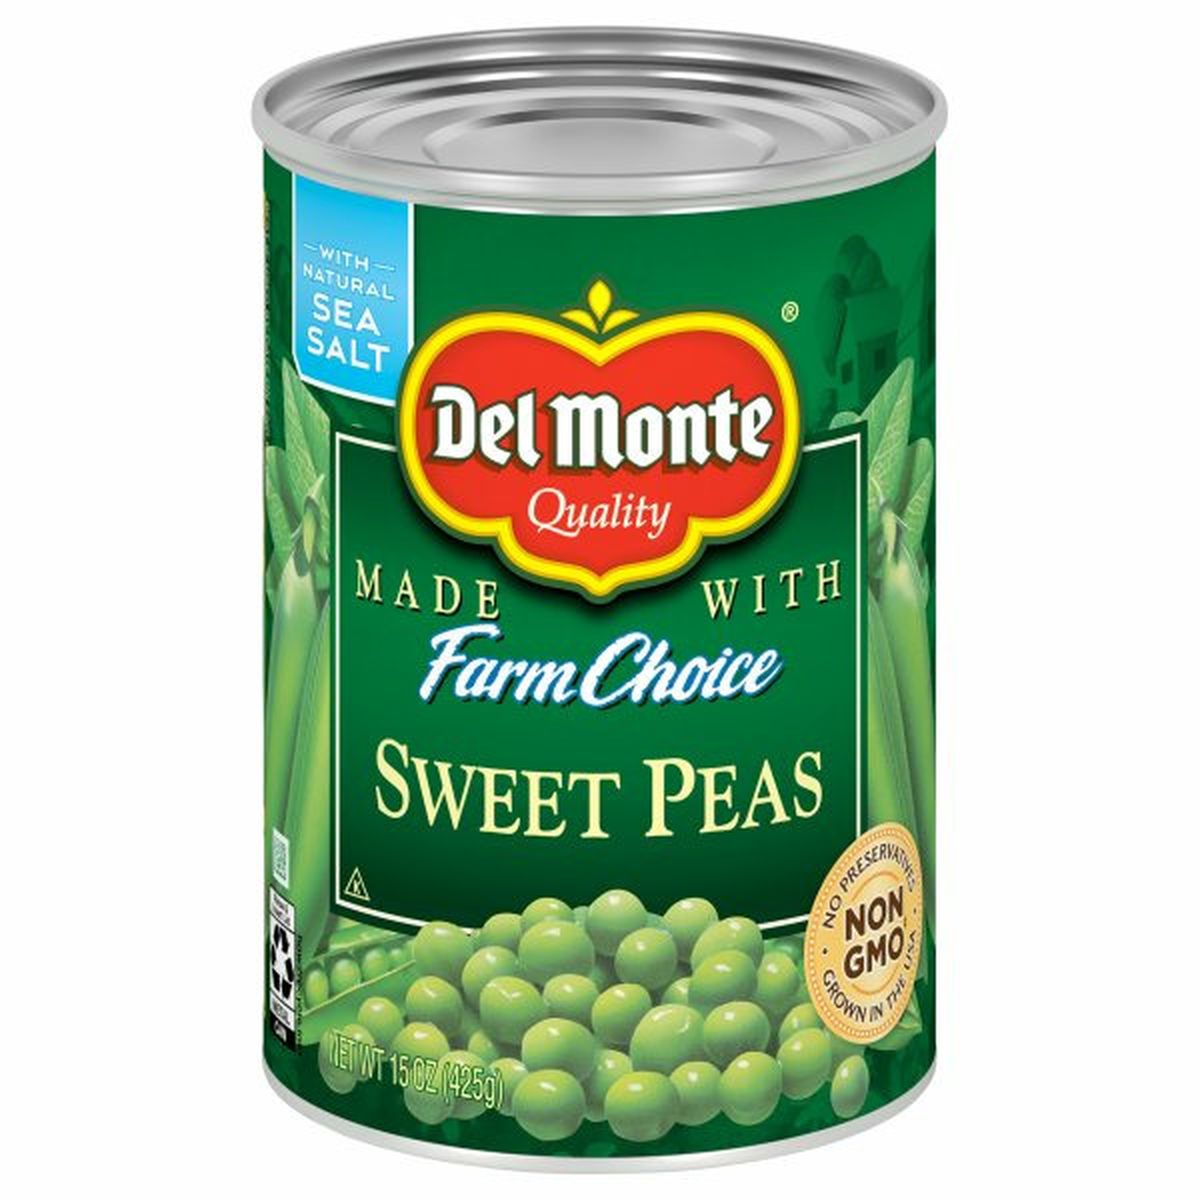 Calories in Del Monte Sweet Peas